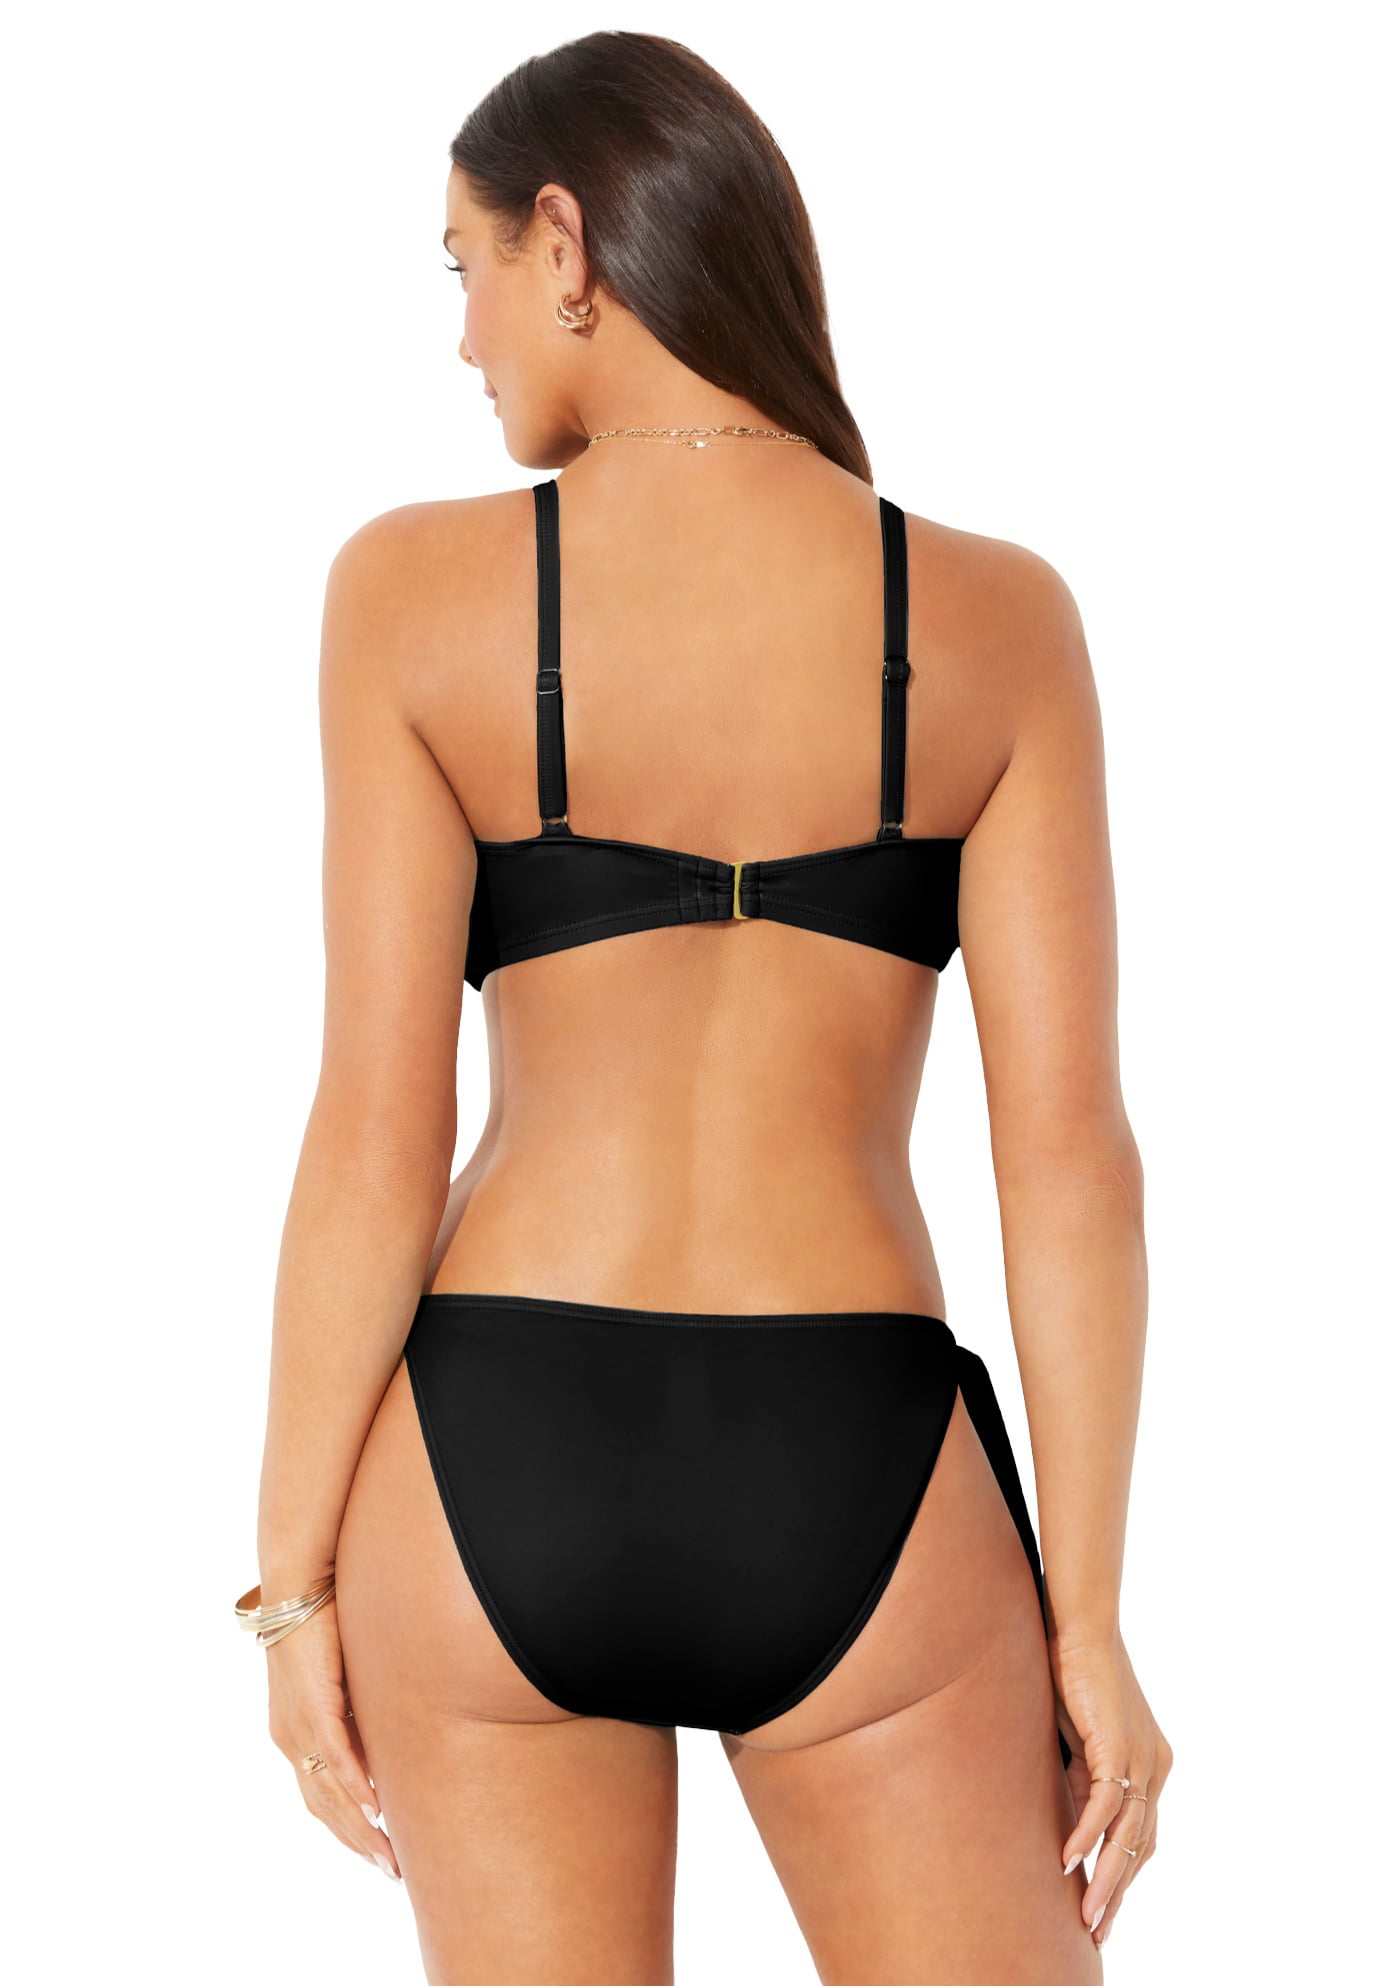 nsendm Female Underwear Adult 34ddd Swimsuit Top Sexy Bikini 2023 Swimsuit  Women Swimwear Push Up Bikini Set Thong Sports Bra Bathing Suit Top(Black,  S) 